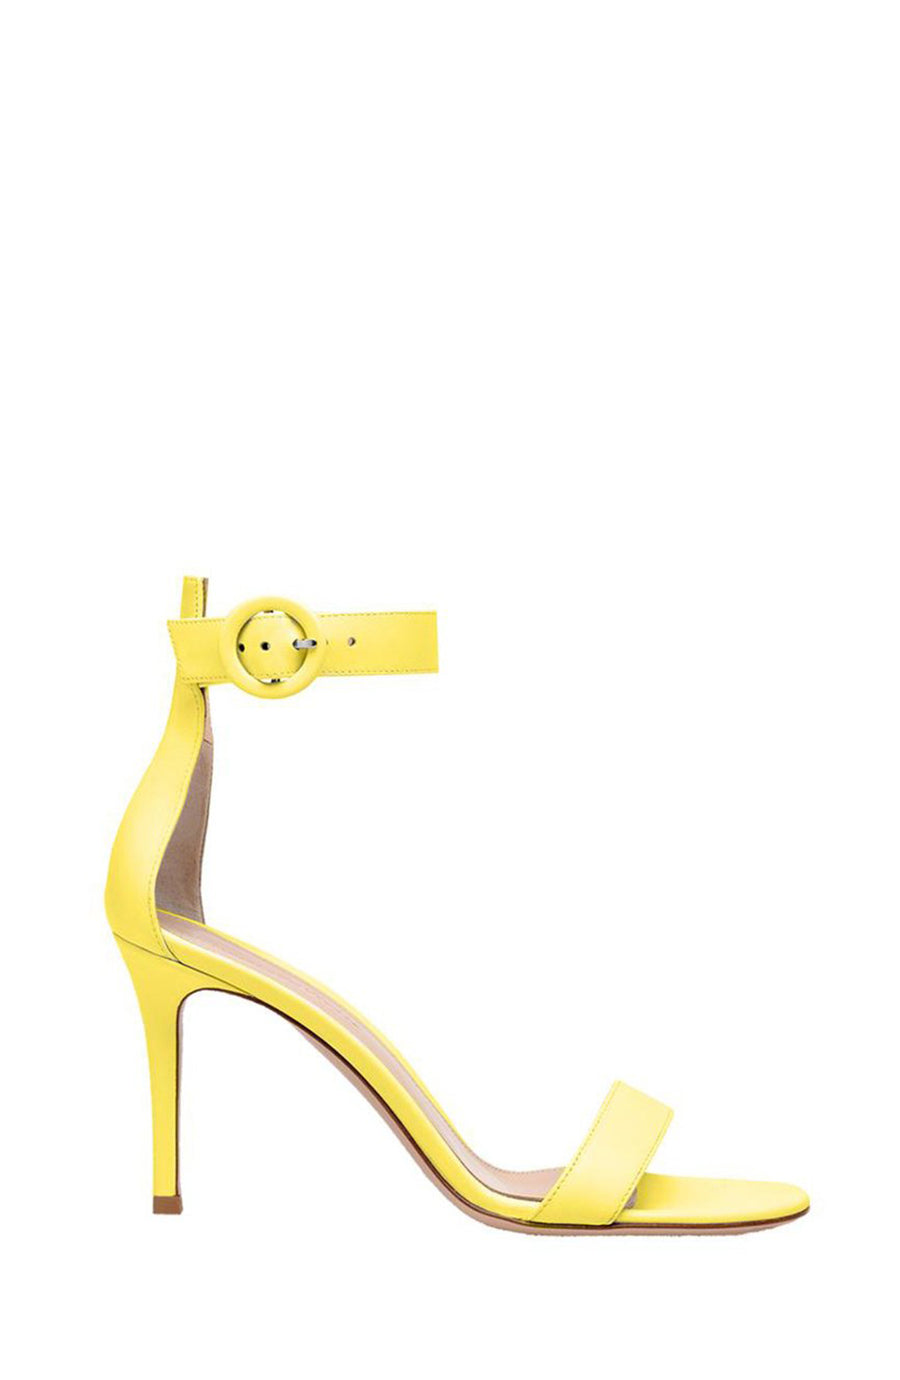 'Portofino' Yellow Sandal